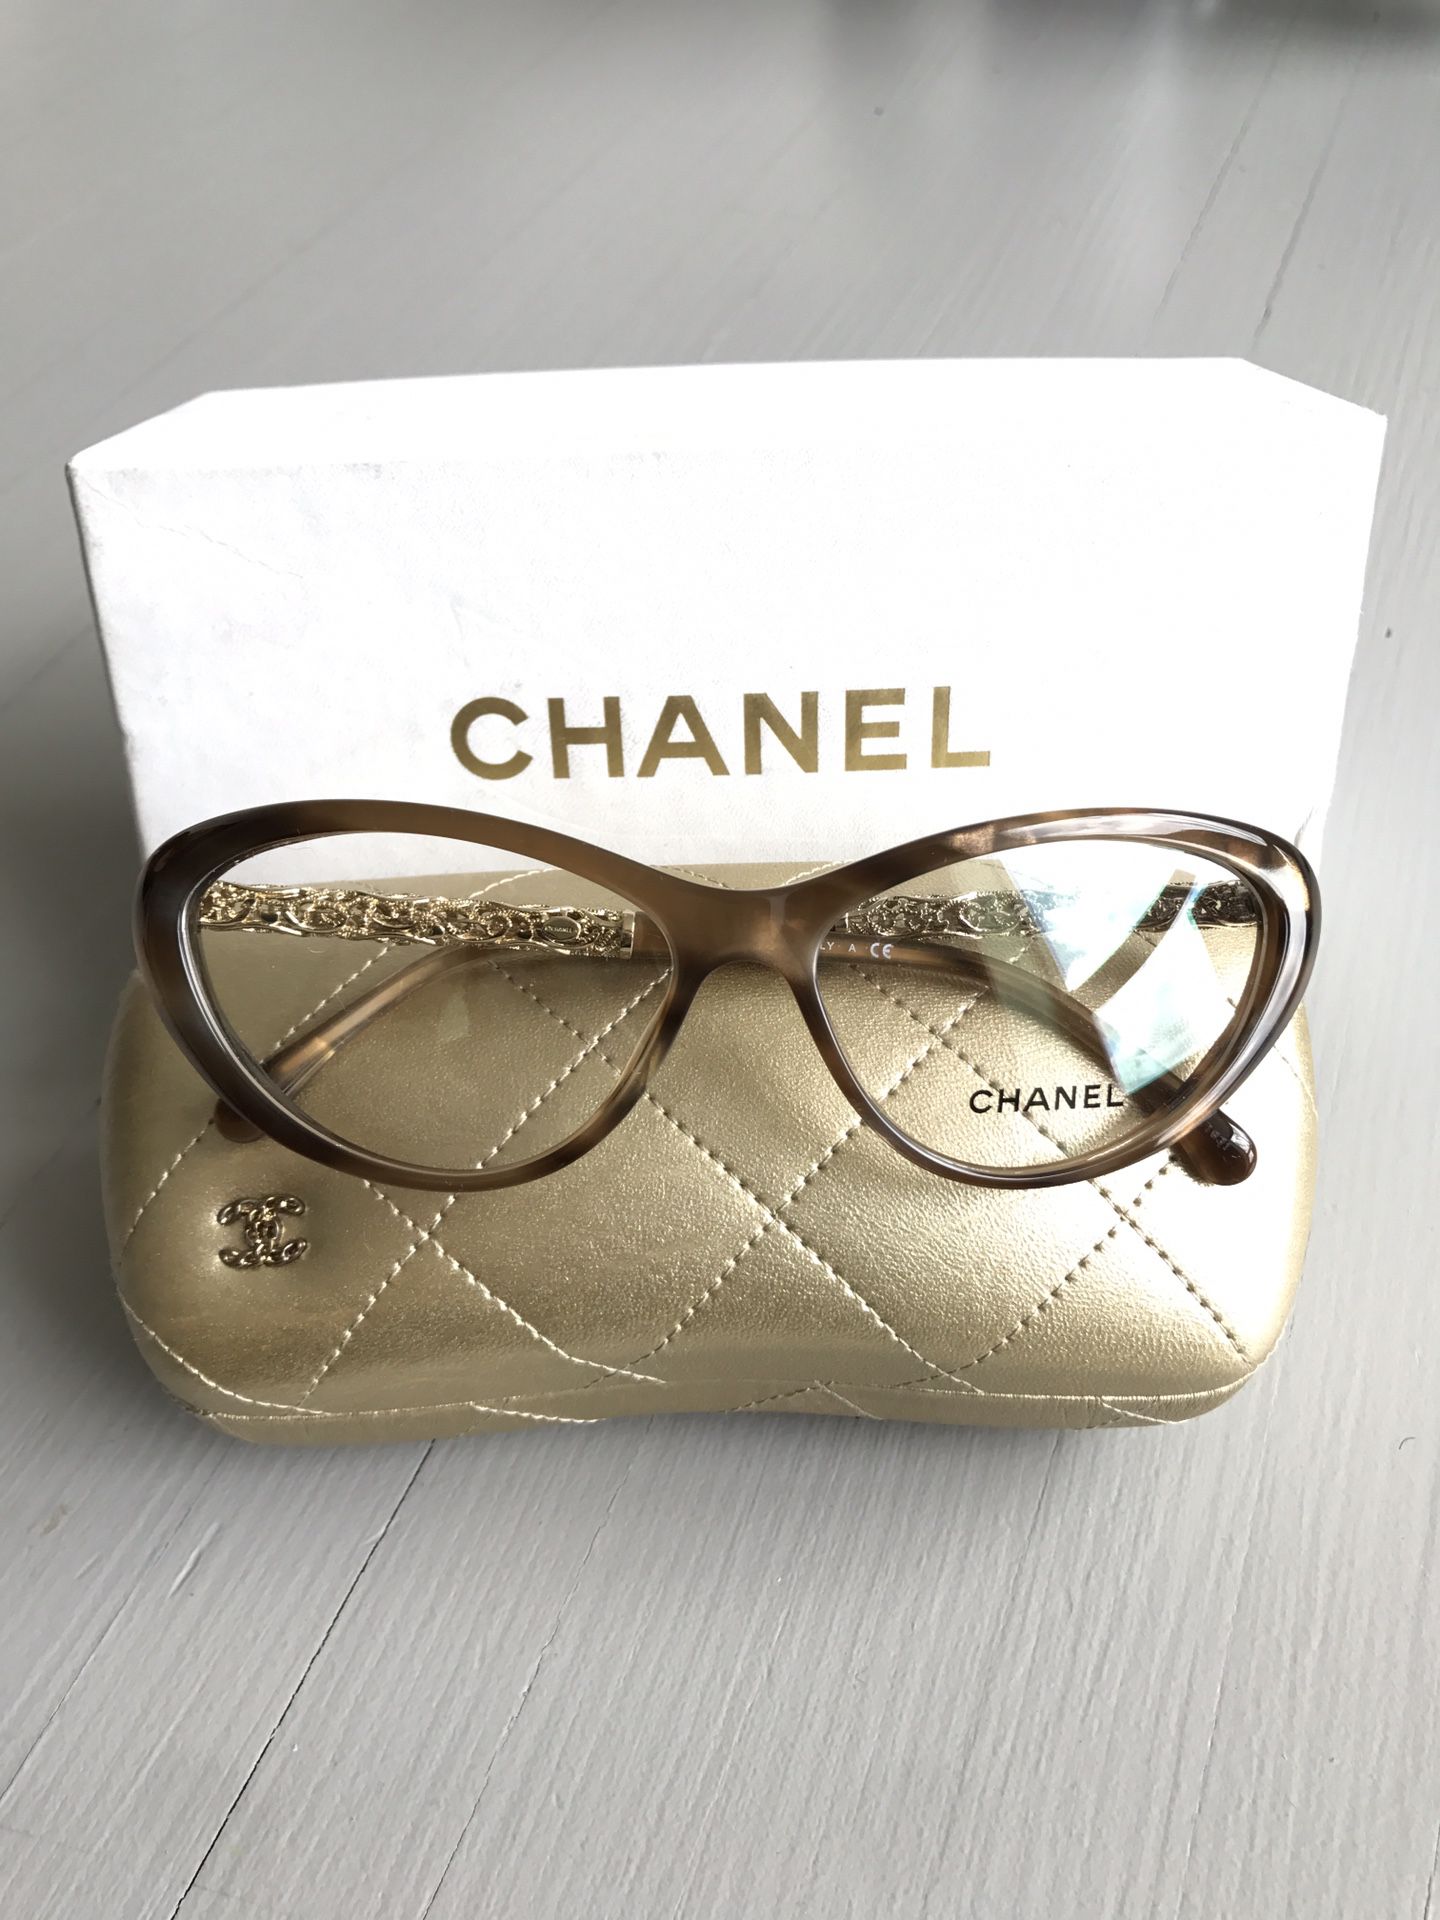 NEW CoCo Chanel Bijou Eyeglasses w/ Gold Filigree 3270 c.1101 for Sale in  Atlanta, GA - OfferUp